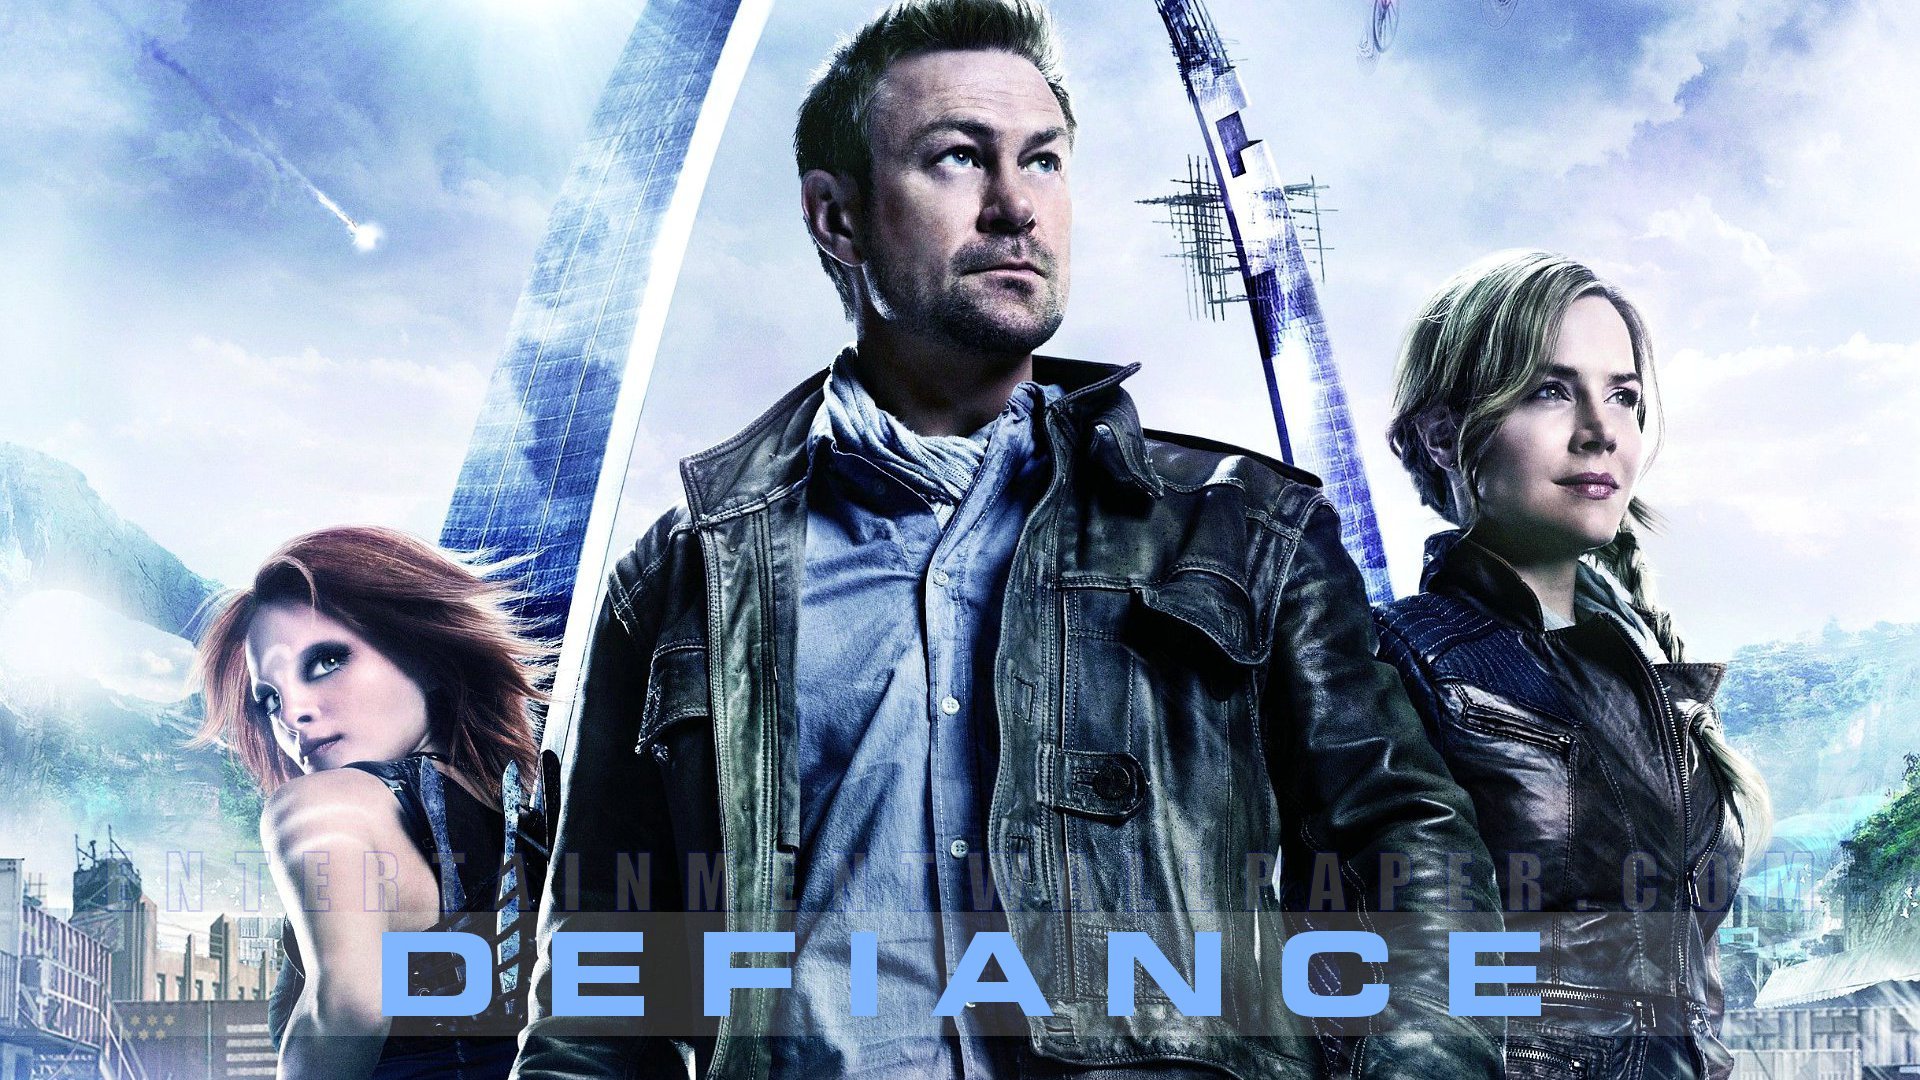 defiance, Series, Action, Drama, Sci fi, Alien Wallpaper